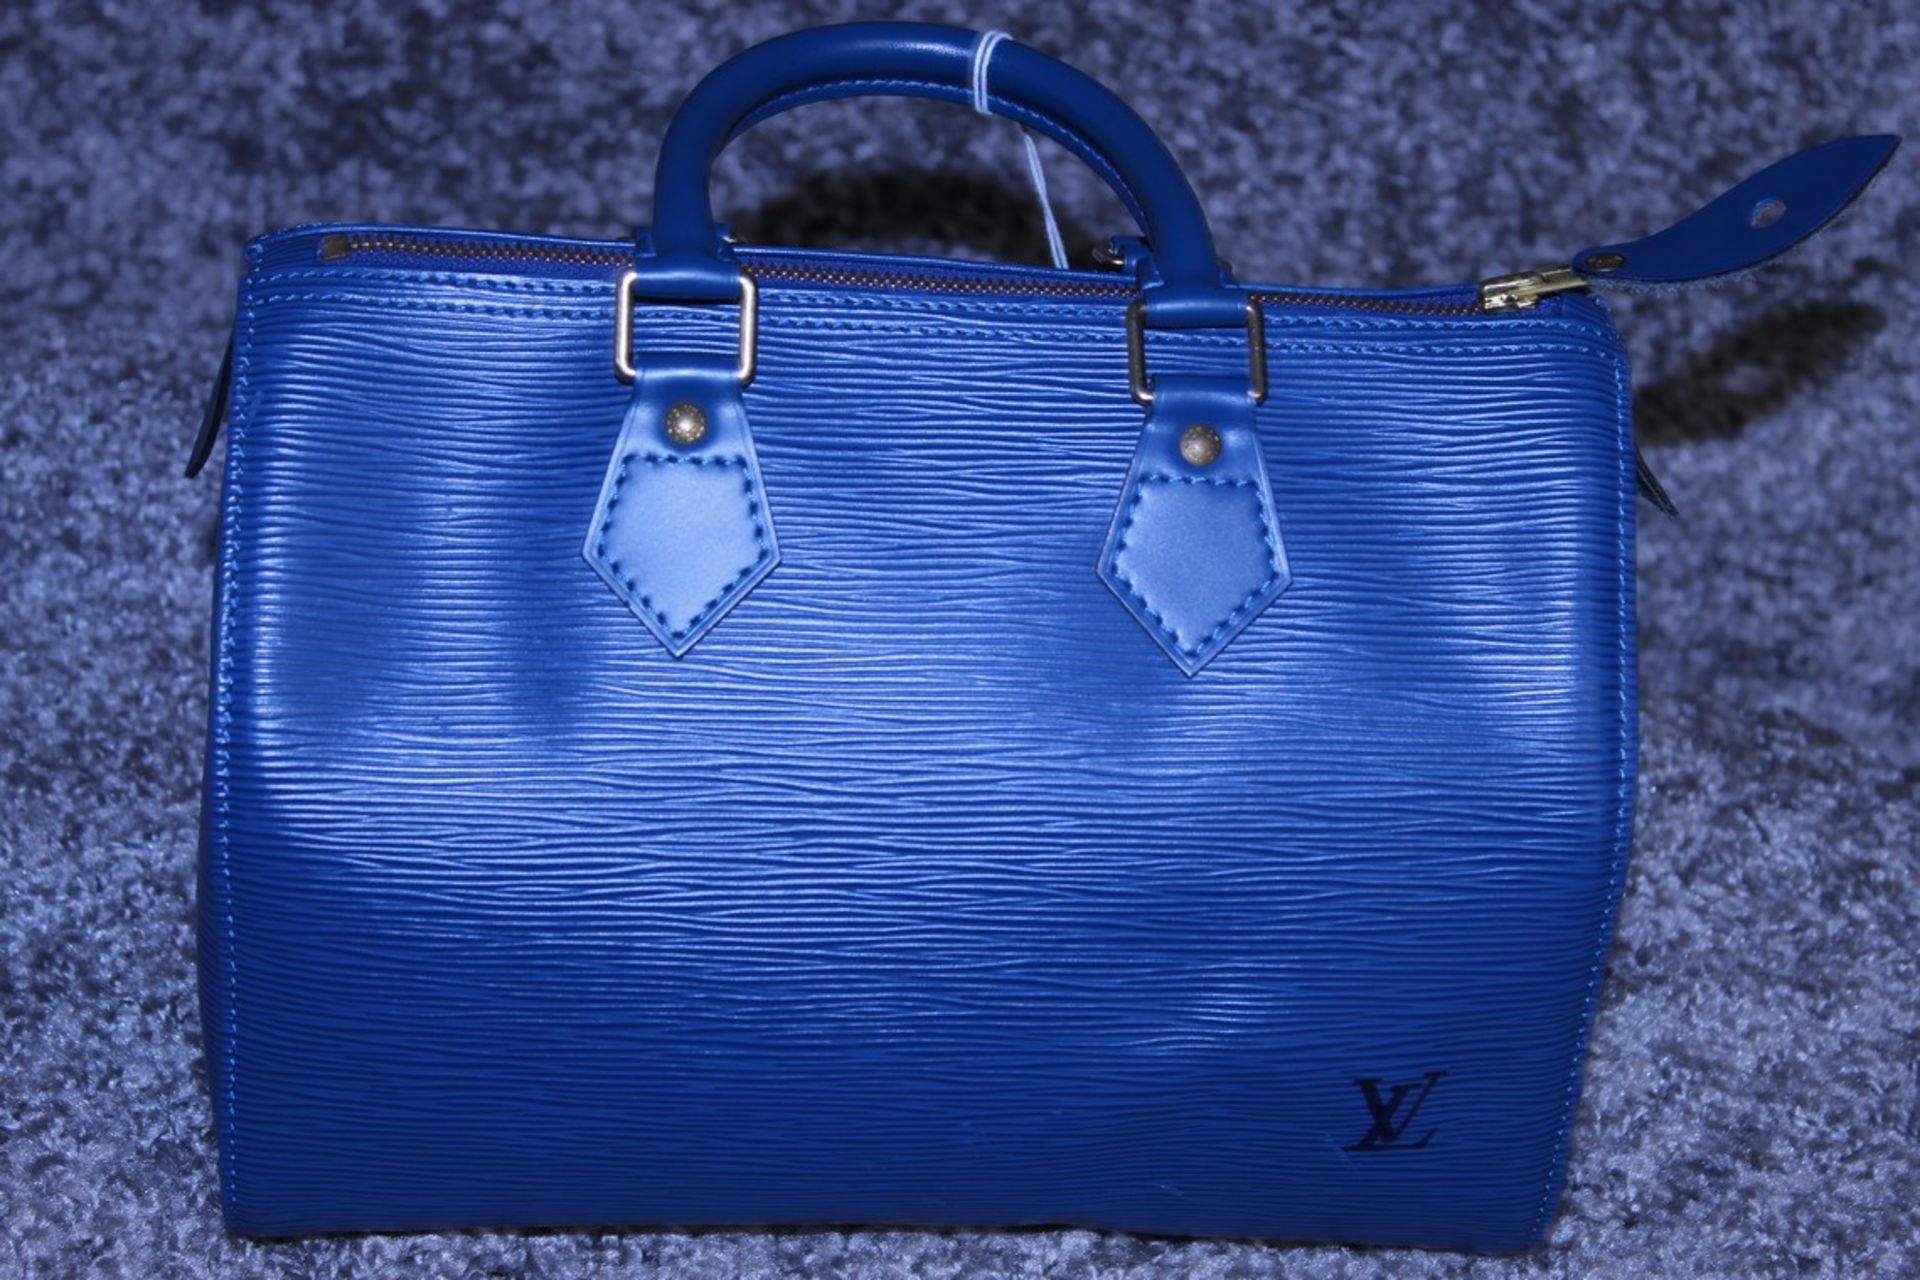 Rrp £1,000 Louis Vuitton Speedy 25 Handbag, Blue Epi Calf Leather, 27X19X15Cm (Production Code - Image 2 of 5